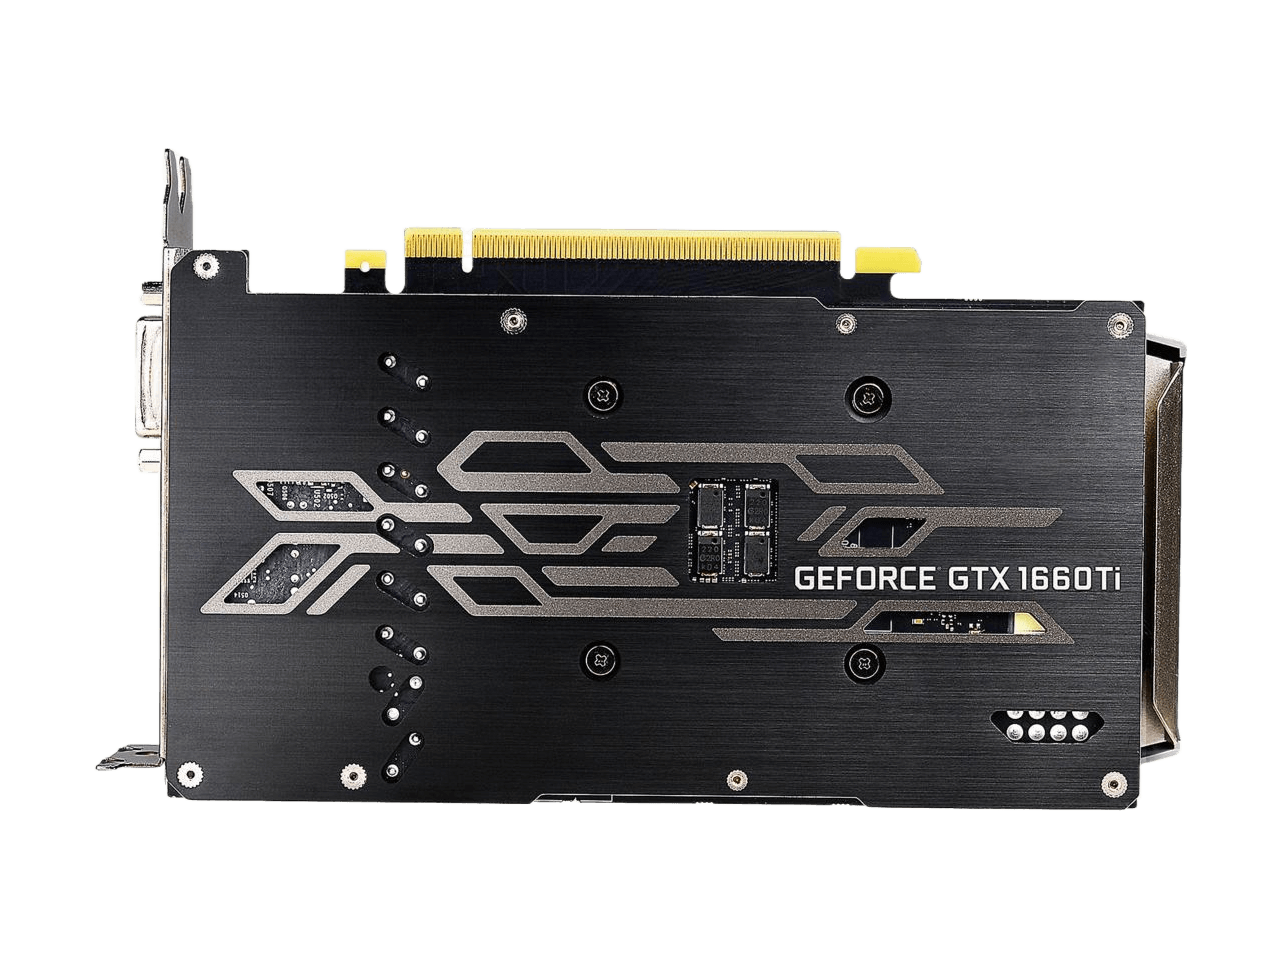 EVGA GeForce GTX 1660 Ti SC ULTRA GAMING 6GB GDDR6 Dual Fan Metal Backplate Video Graphics Card 06G-P4-1667-KR